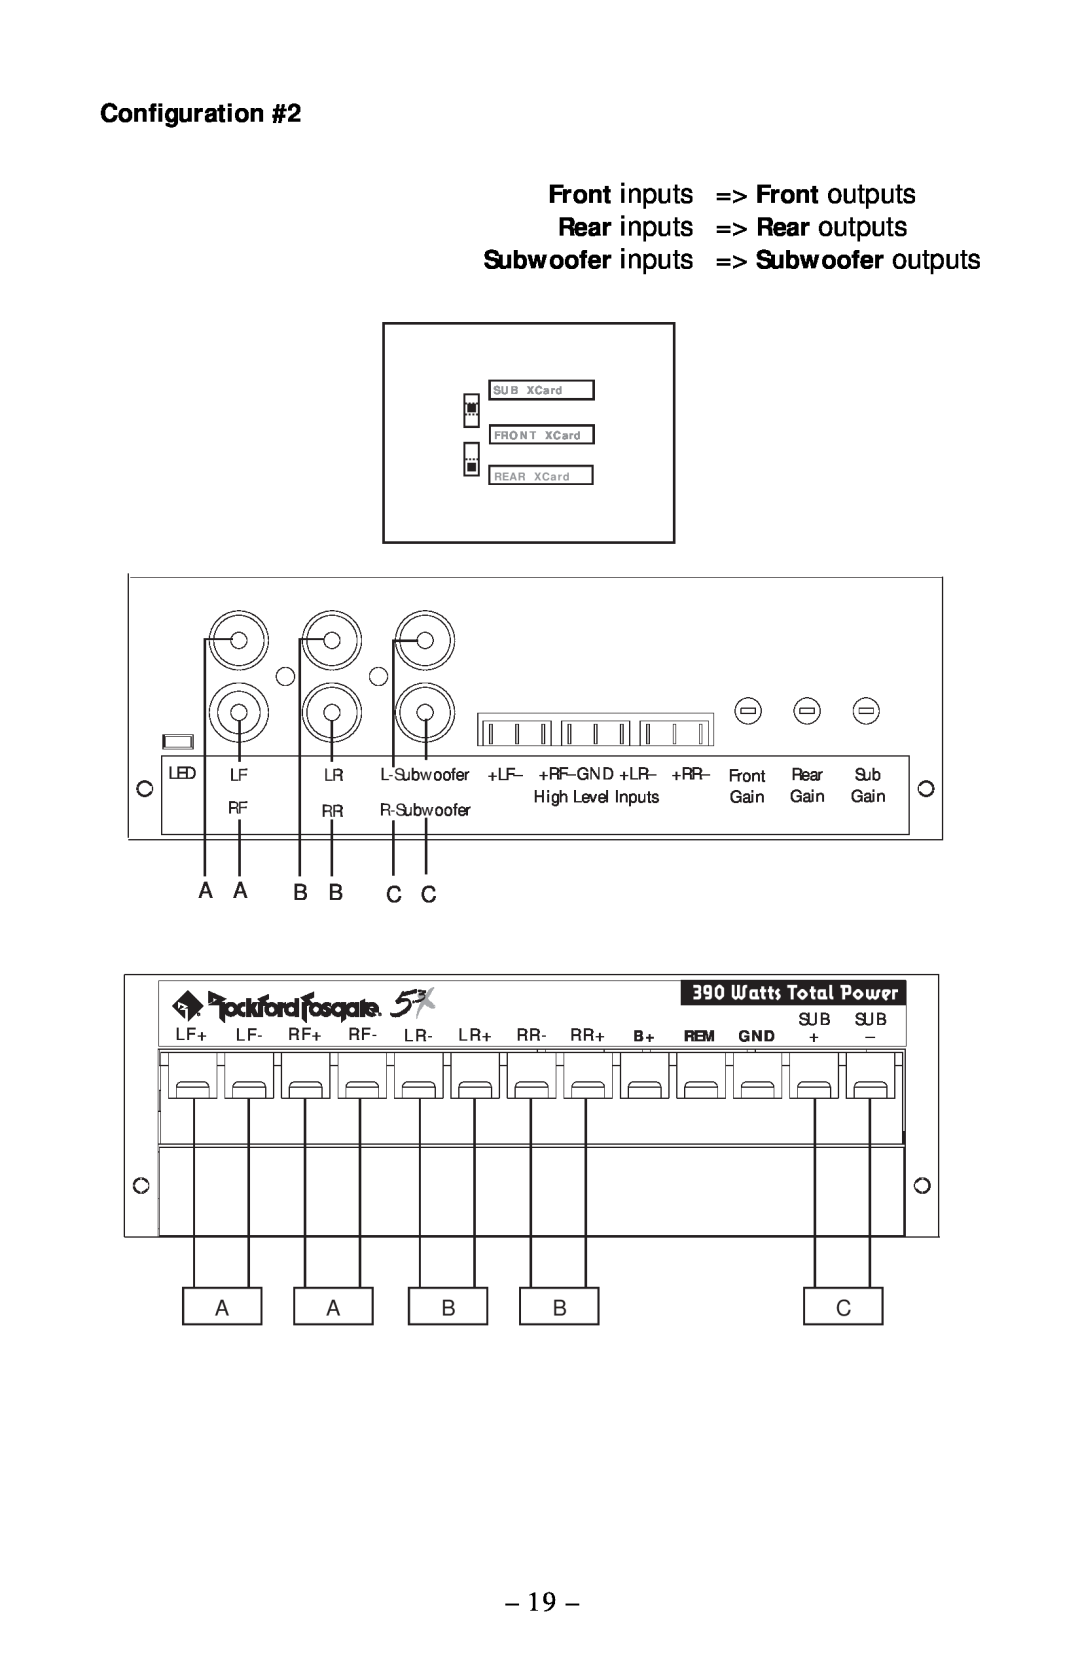 Rockford Fosgate 5.3x manual Configuration #2, Front inputs, Subwoofer inputs 